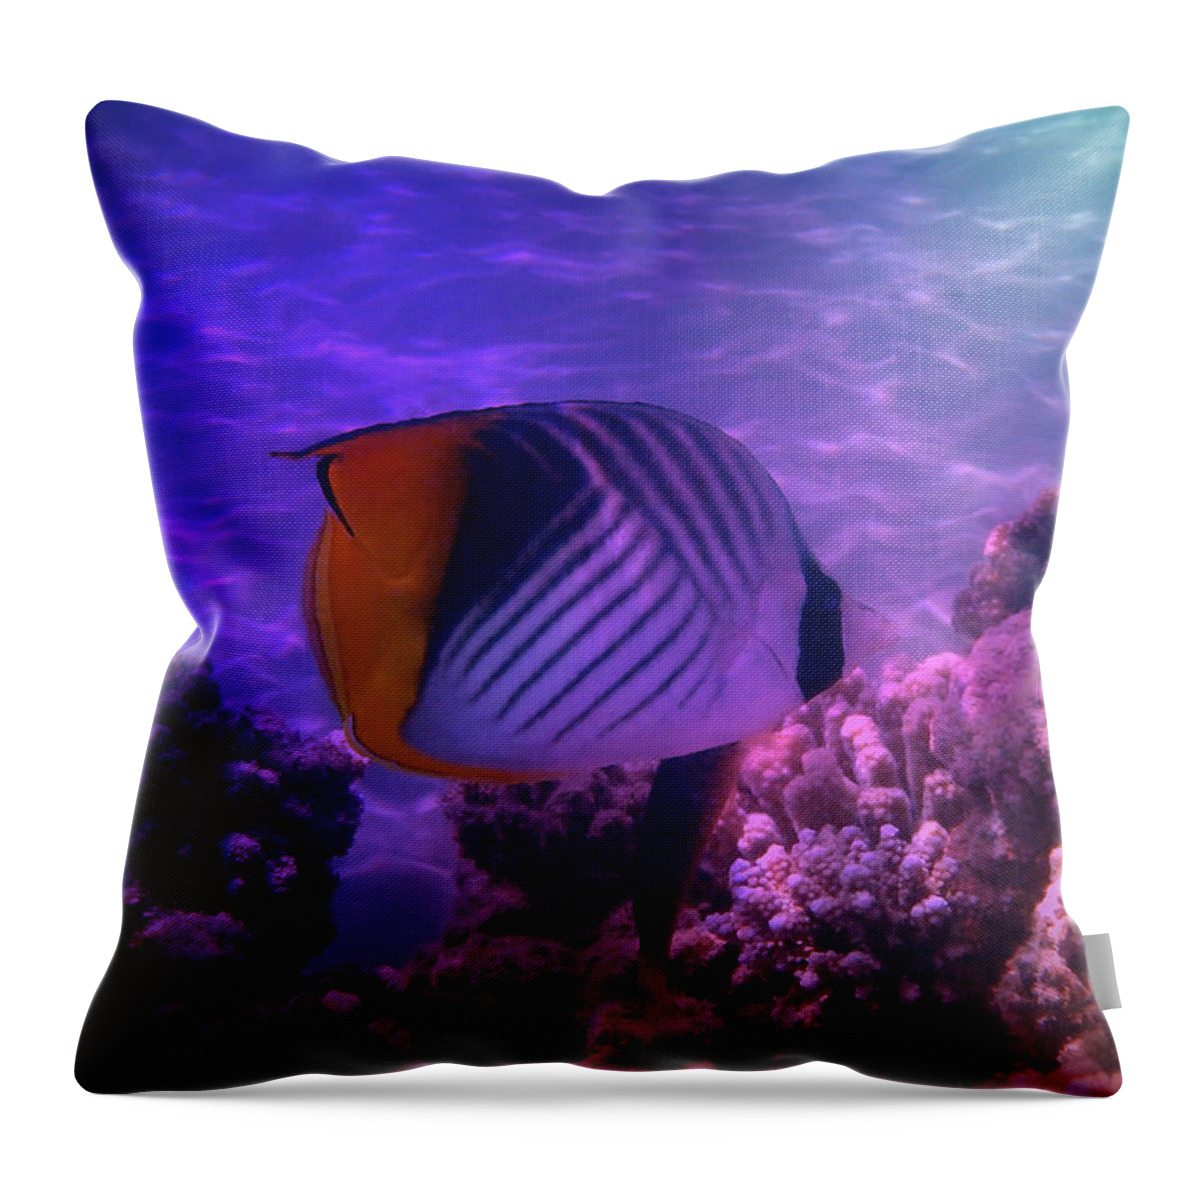 Sealife Throw Pillow featuring the photograph Threadfin Butterflyfish The Creative Way by Johanna Hurmerinta